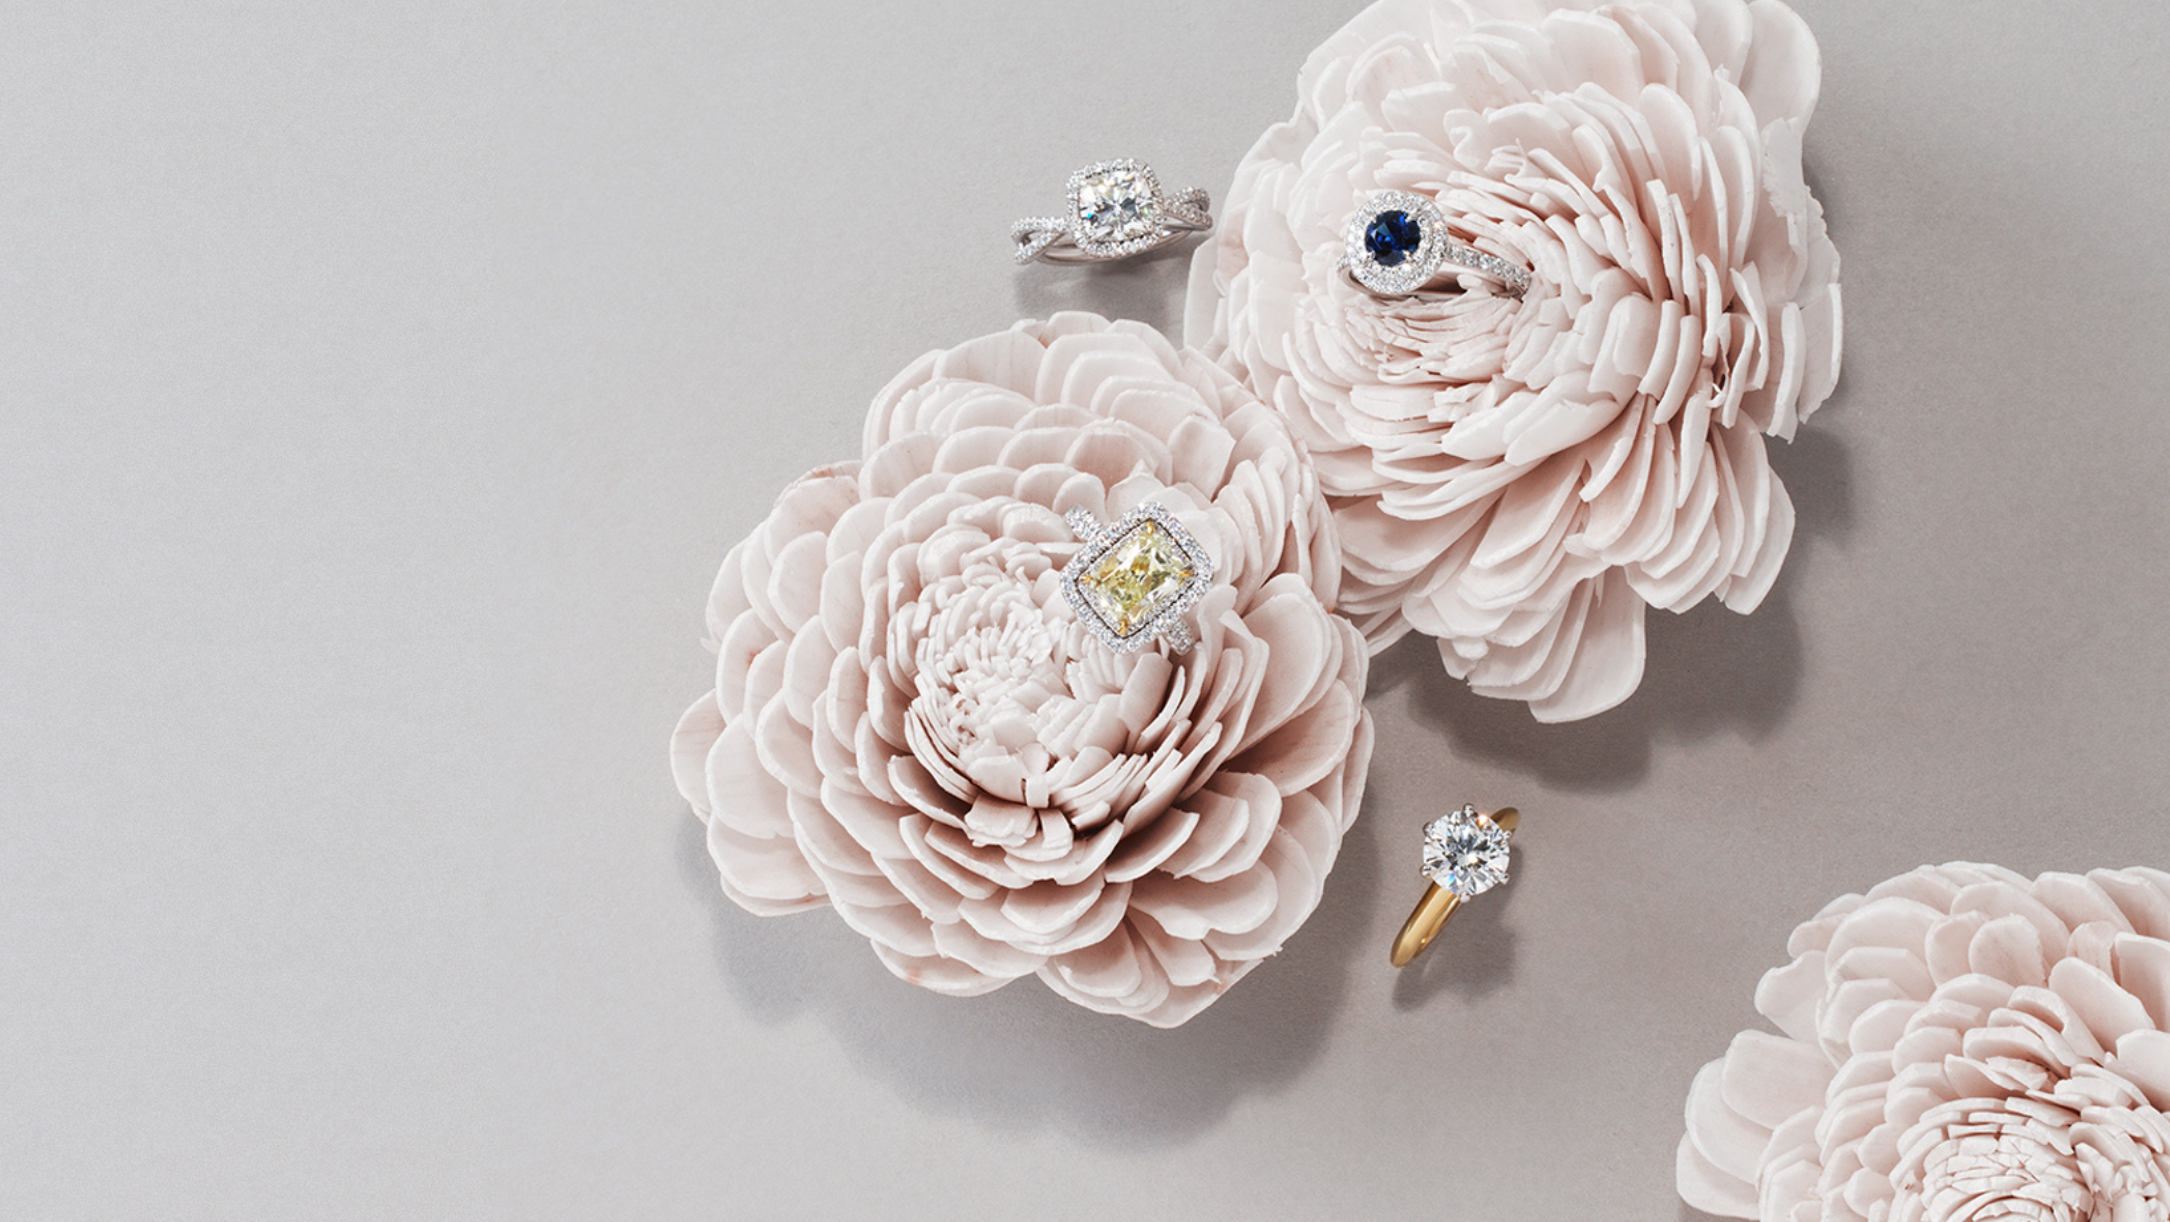 Louis Vuitton Idylle Blossom Single Diamond Earring in 18K Yellow Gold 0.03  CTW, myGemma, DE